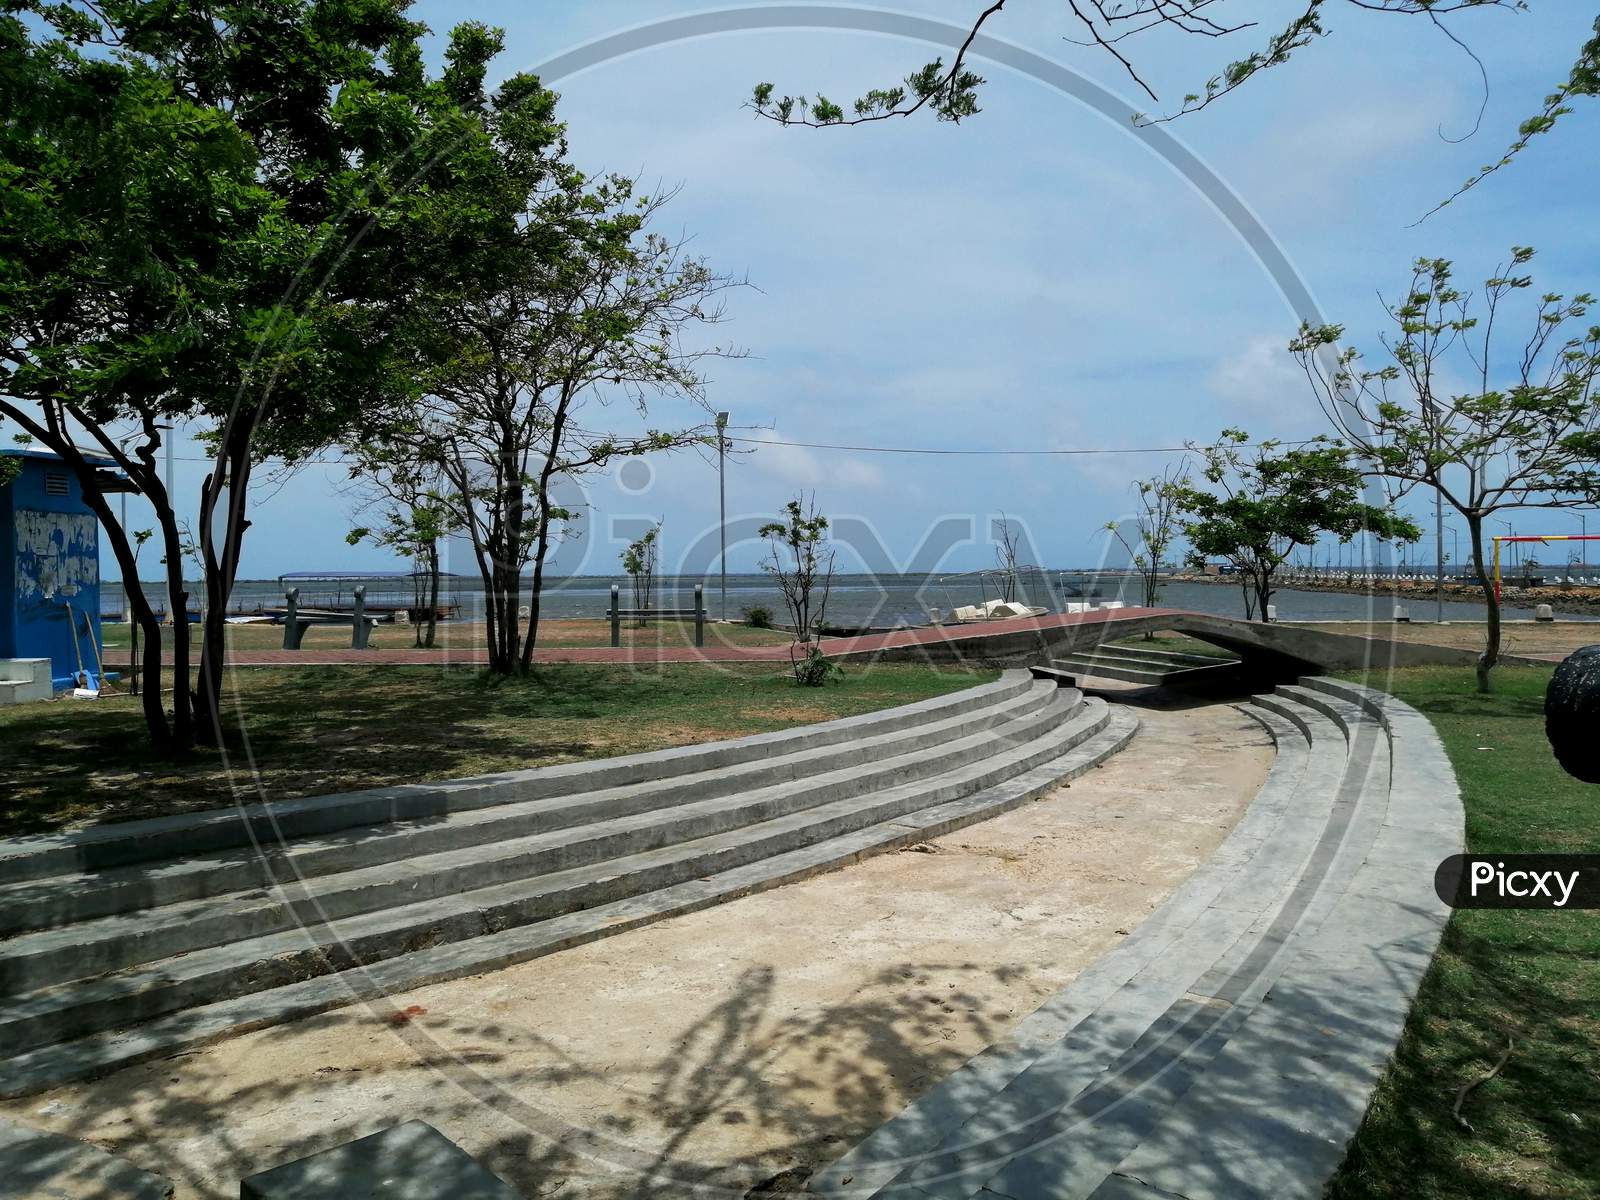 The View Of The Jaffna Pannai Beach Park In Sri Lanka.